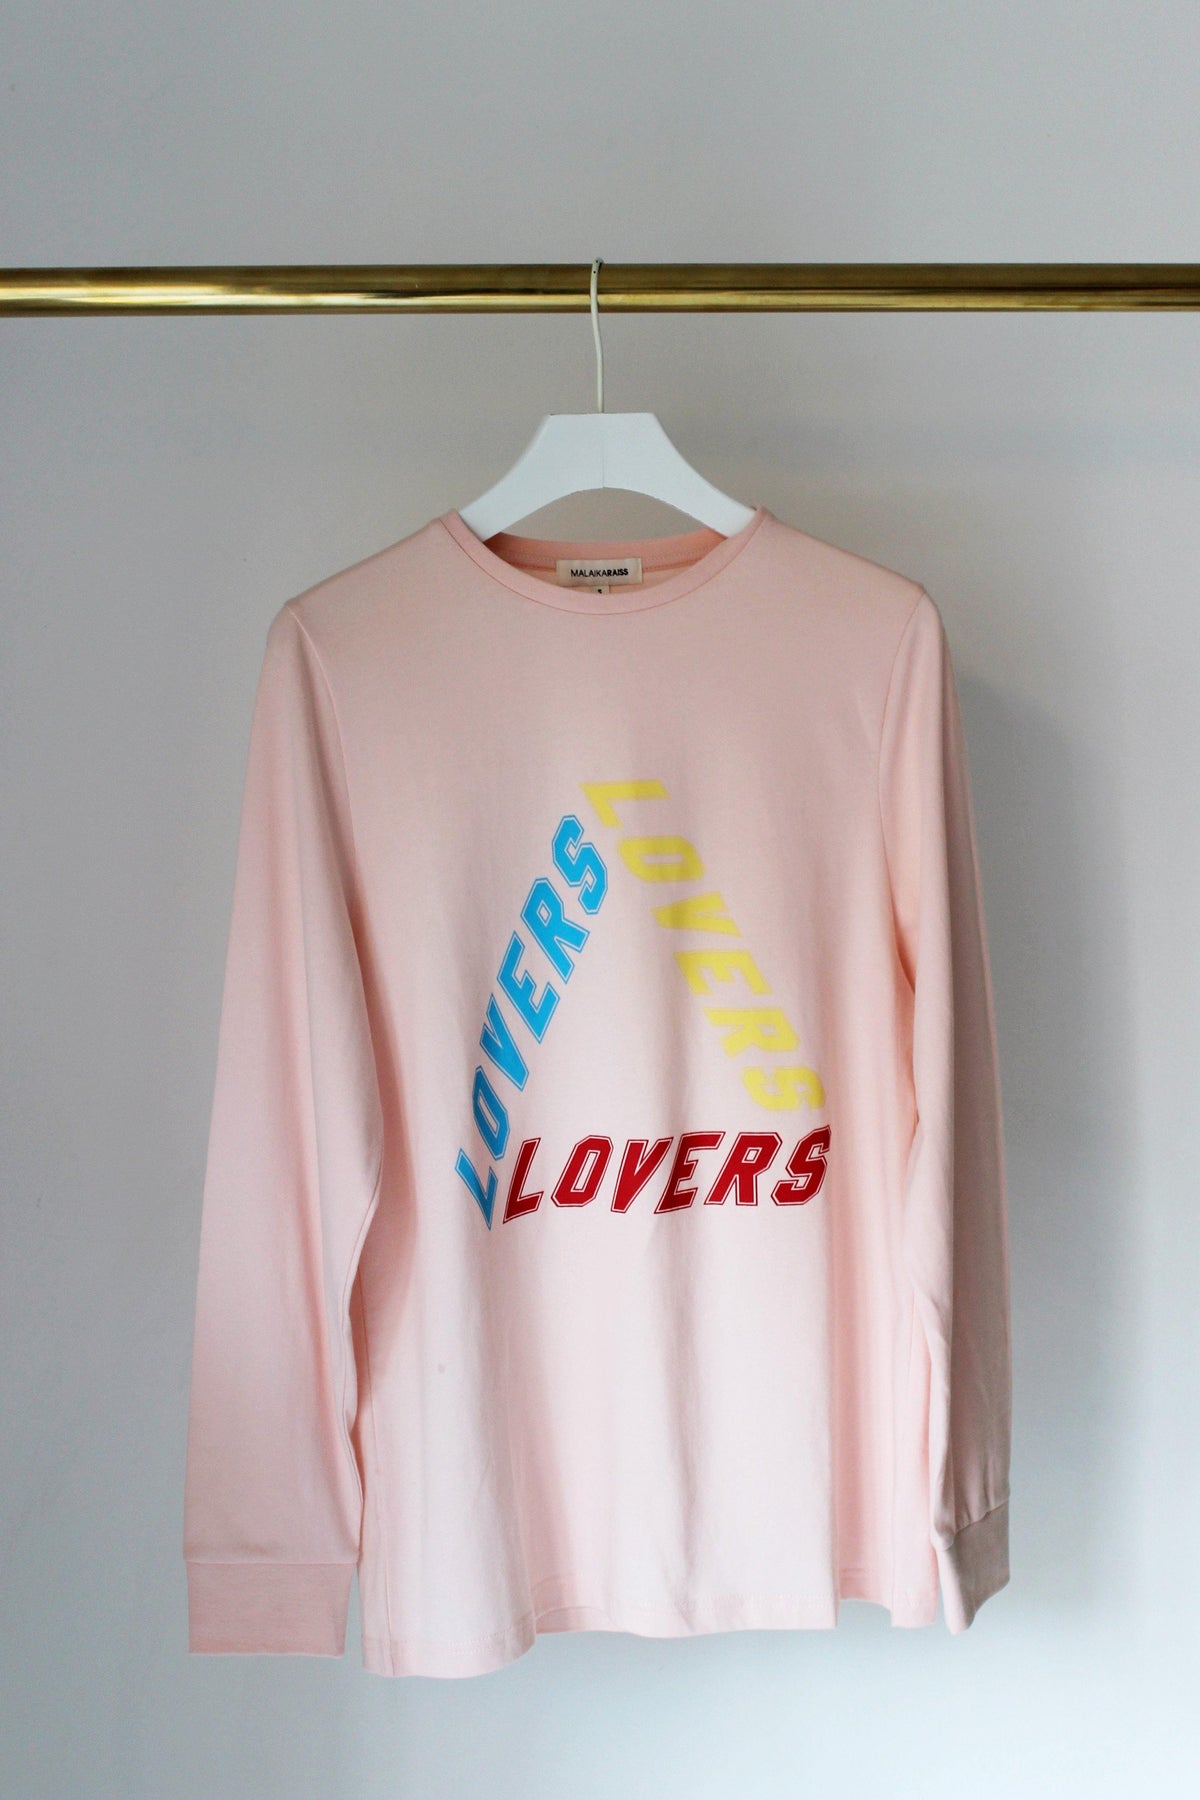 MALAIKARAISS Lovers Longsleeve pink - The Good Store Berlin